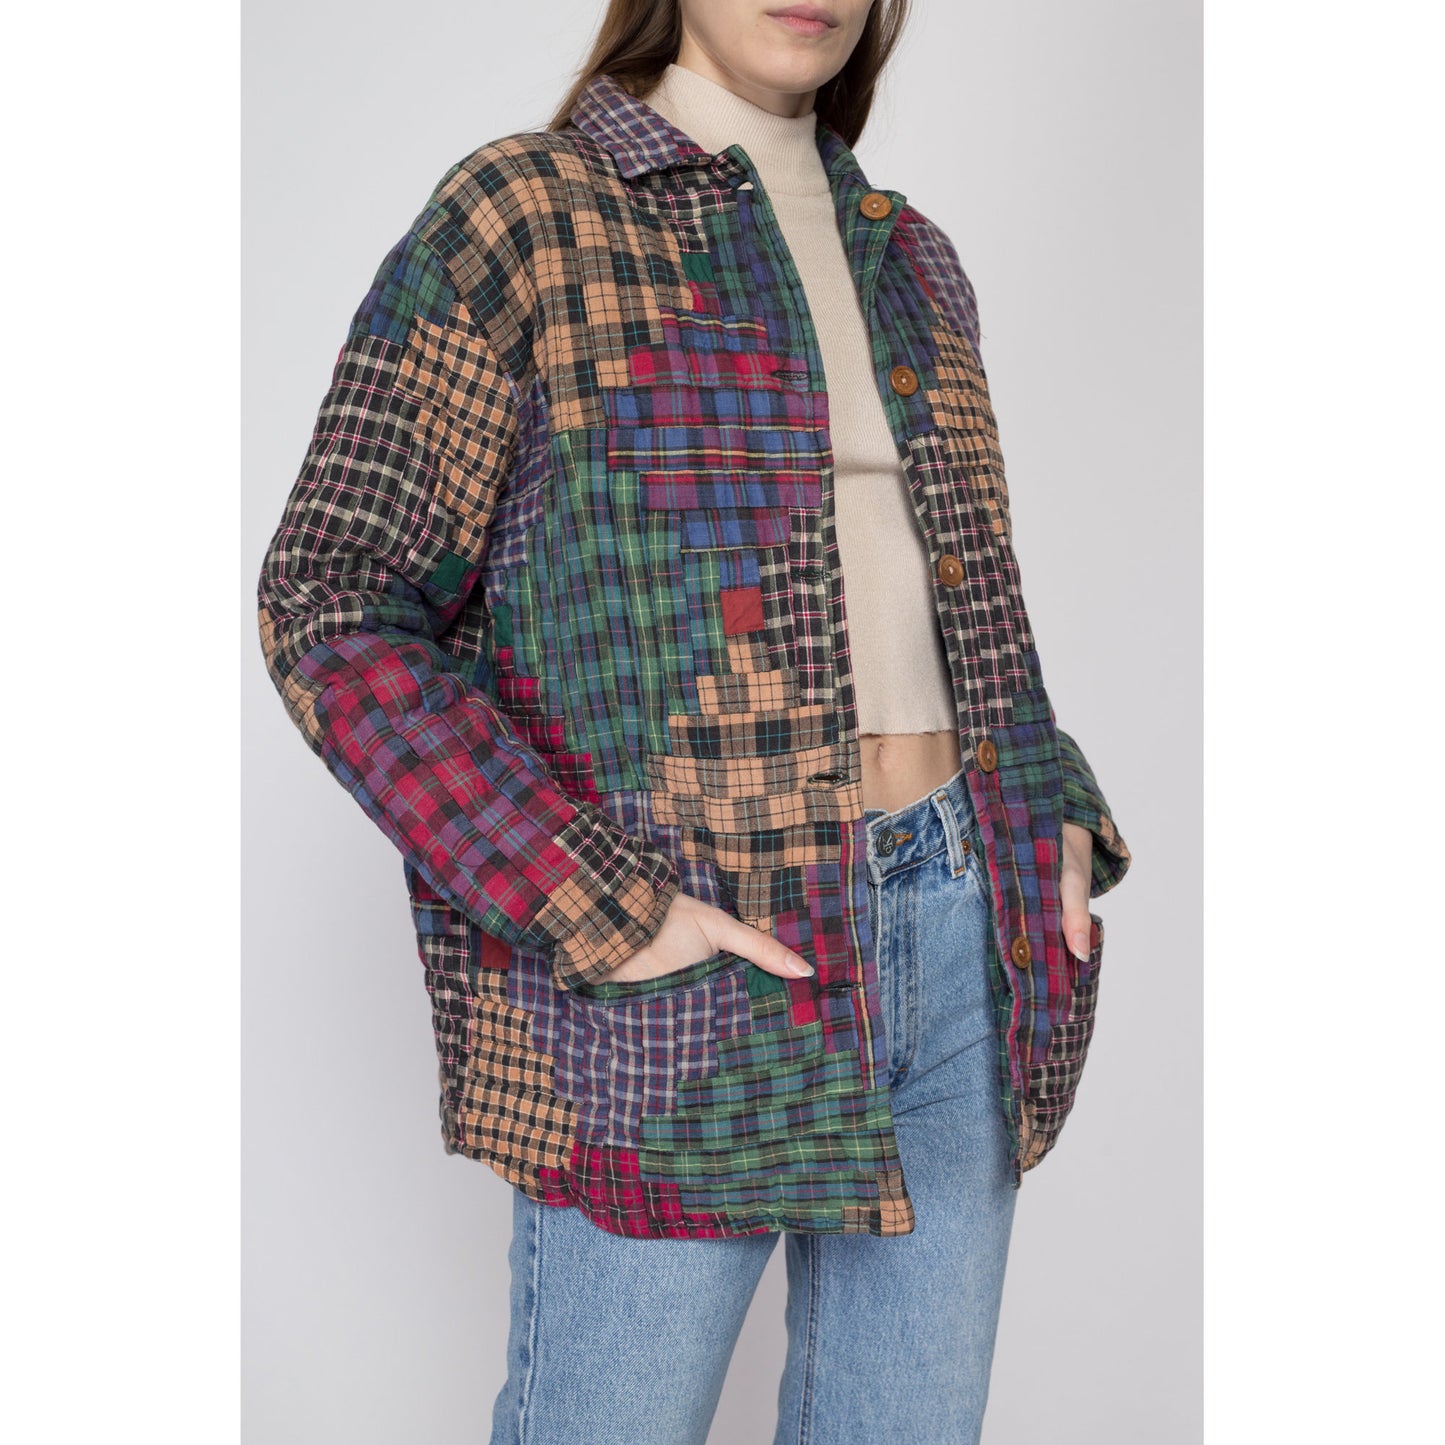 Small 90s Boho Reversible Plaid Patchwork Quilted Jacket | Vintage Patch Magic Multicolor Cotton Button Up Hippie Coat